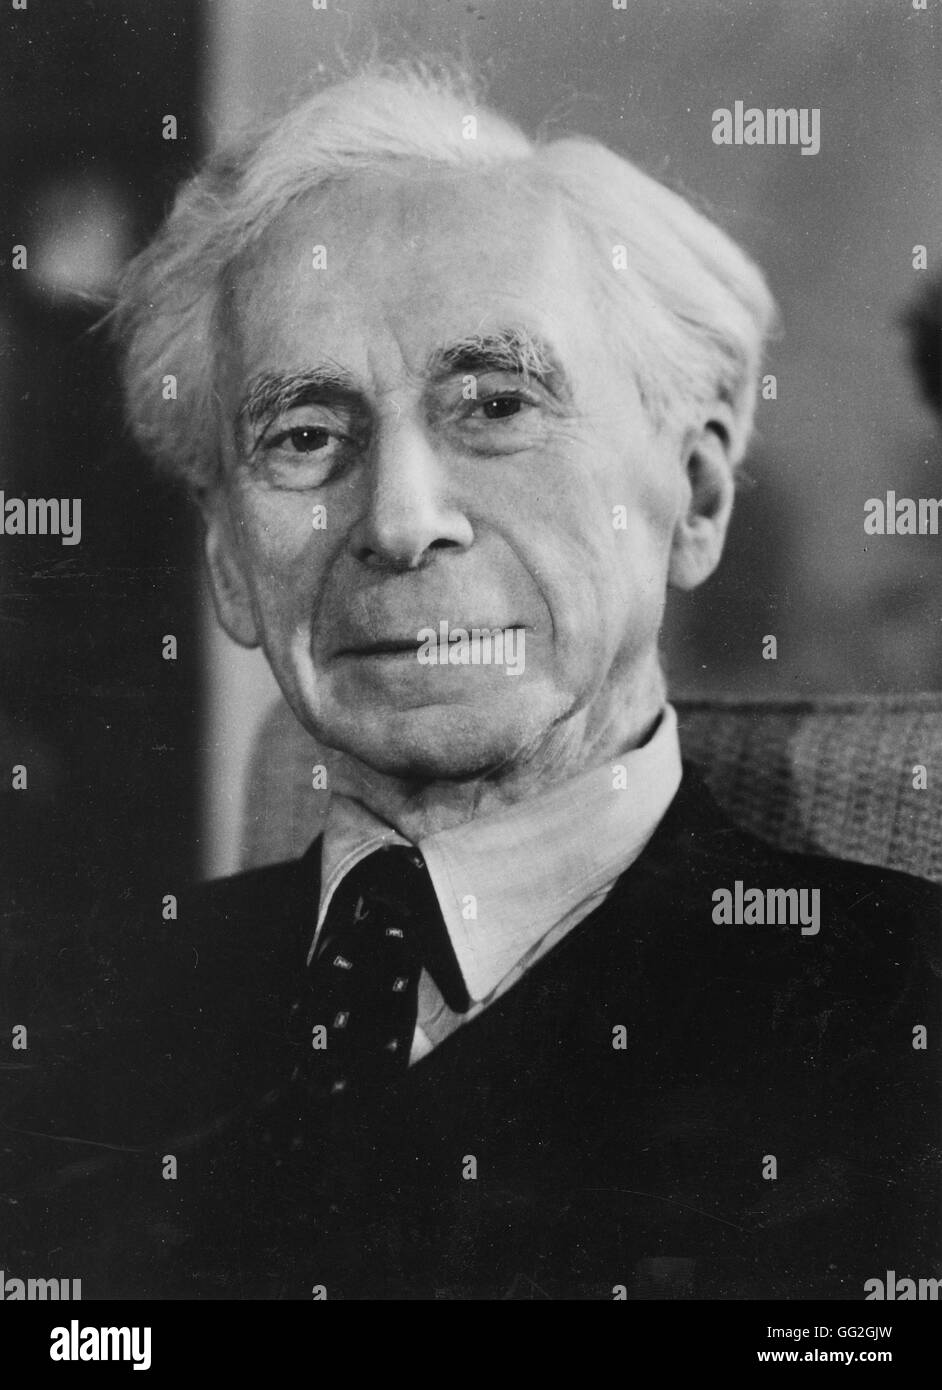 Bertrand Russell (1872-1970). British philosopher and Nobel Prize winner in literature. Photographic portrait. 1950s. Stock Photo